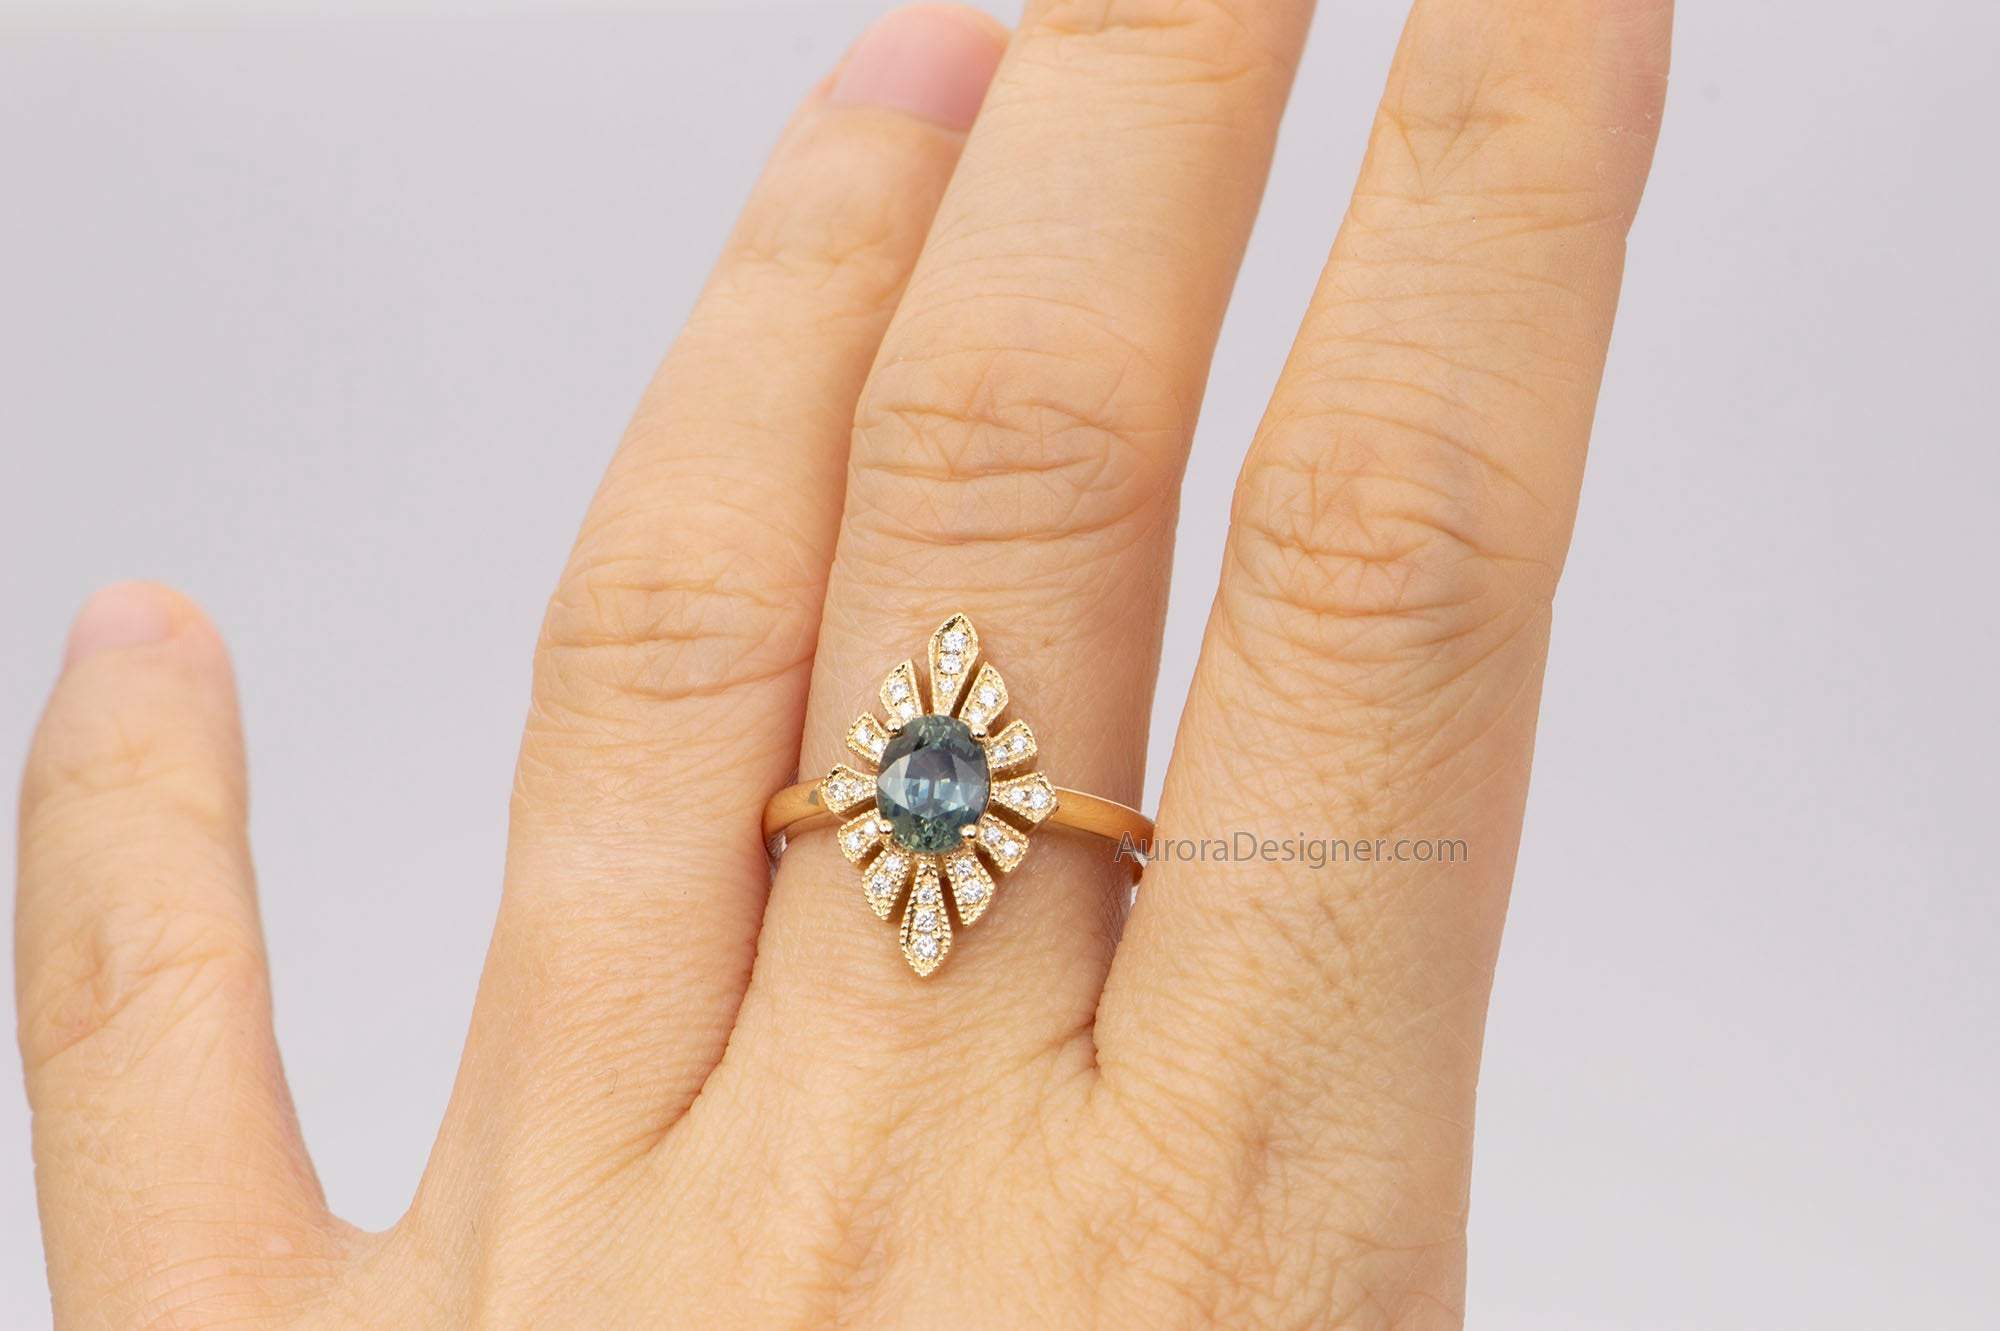 Disney Aurora Inspired Merriweather Diamond Ring with Blue Sapphire | Enchanted Disney Fine Jewelry 7